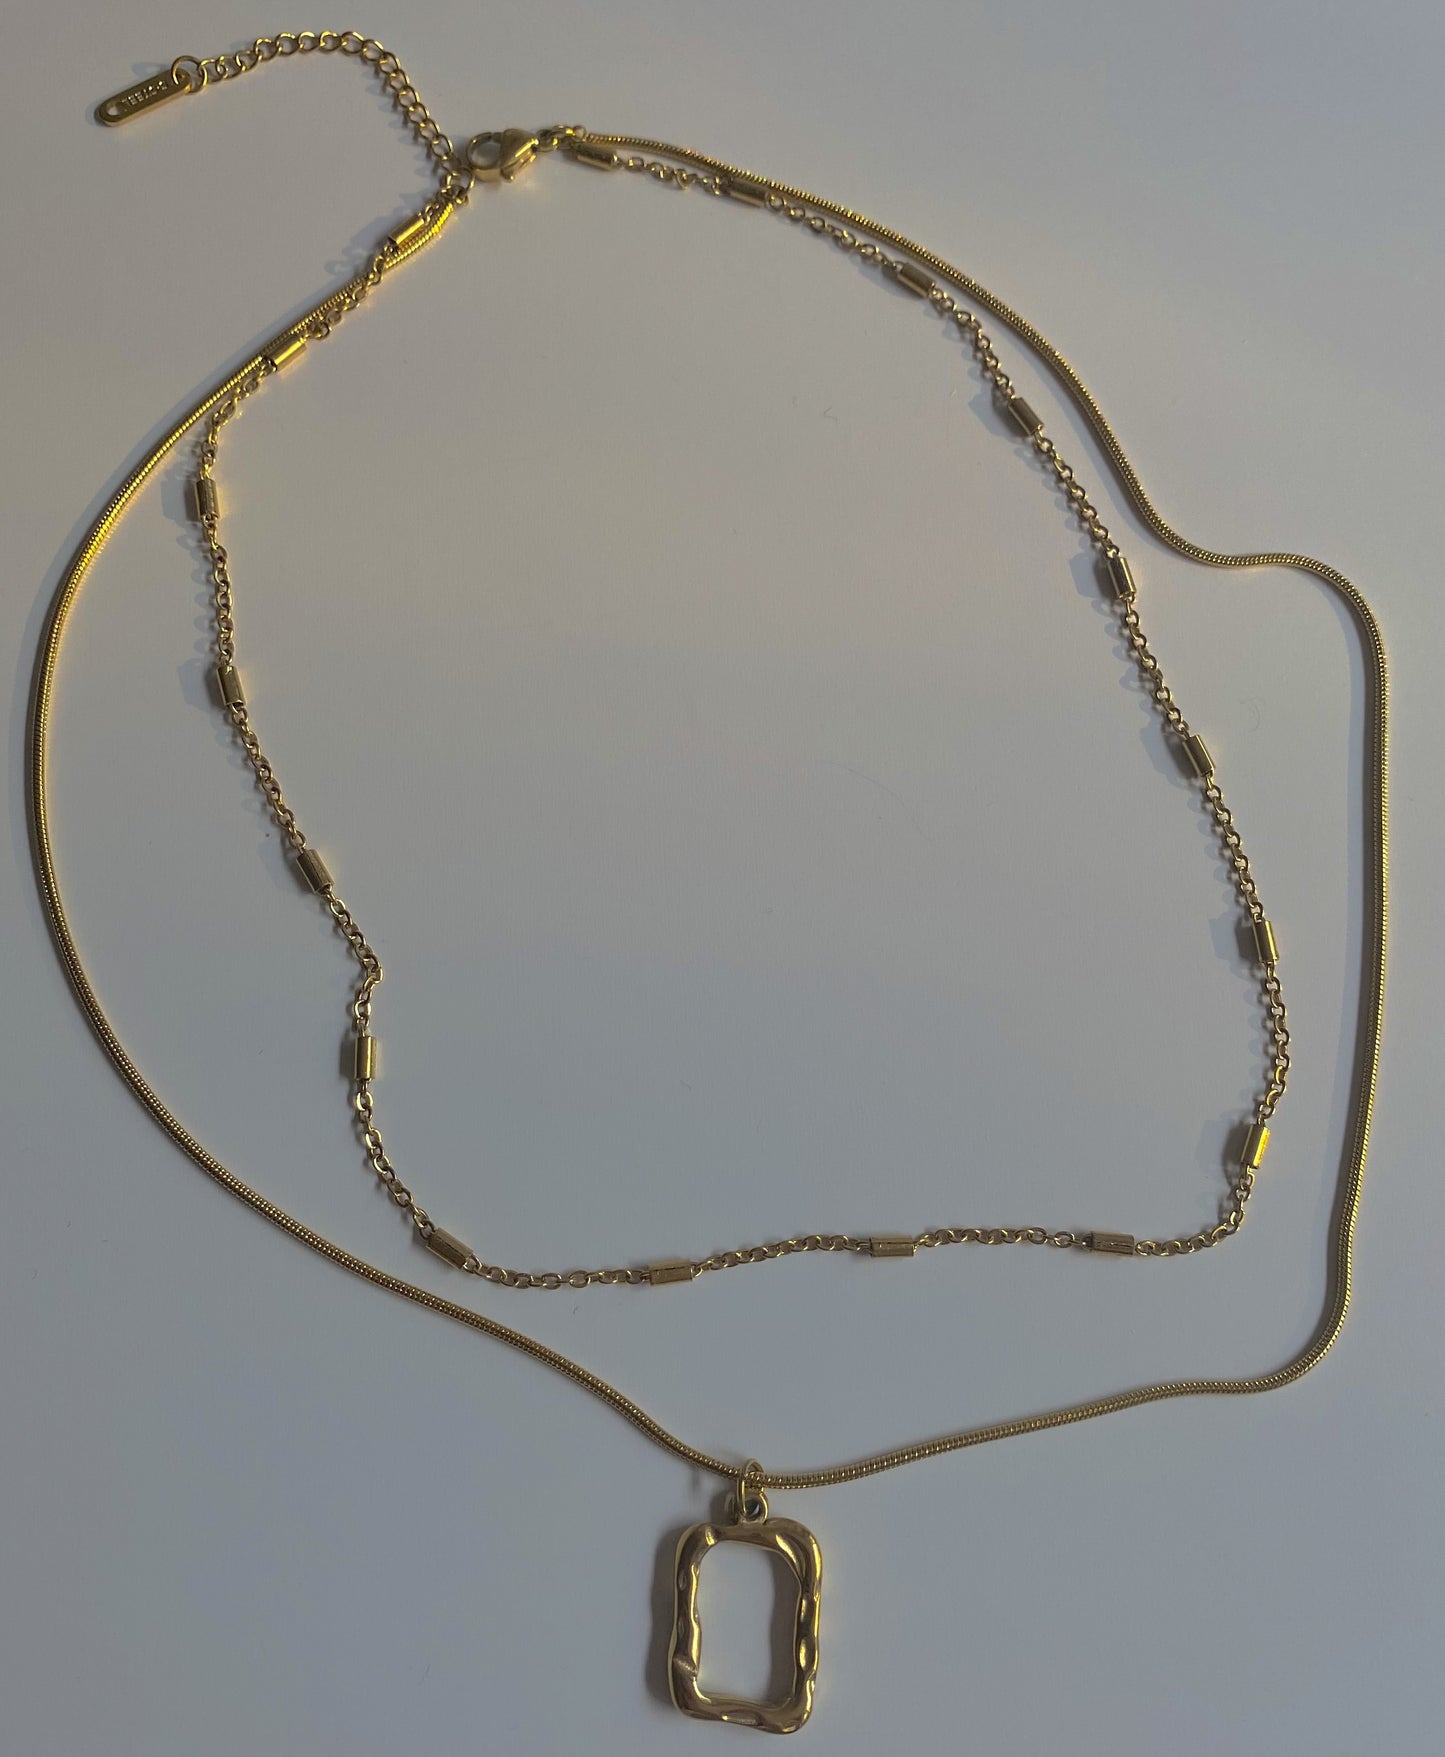 Feature Necklace